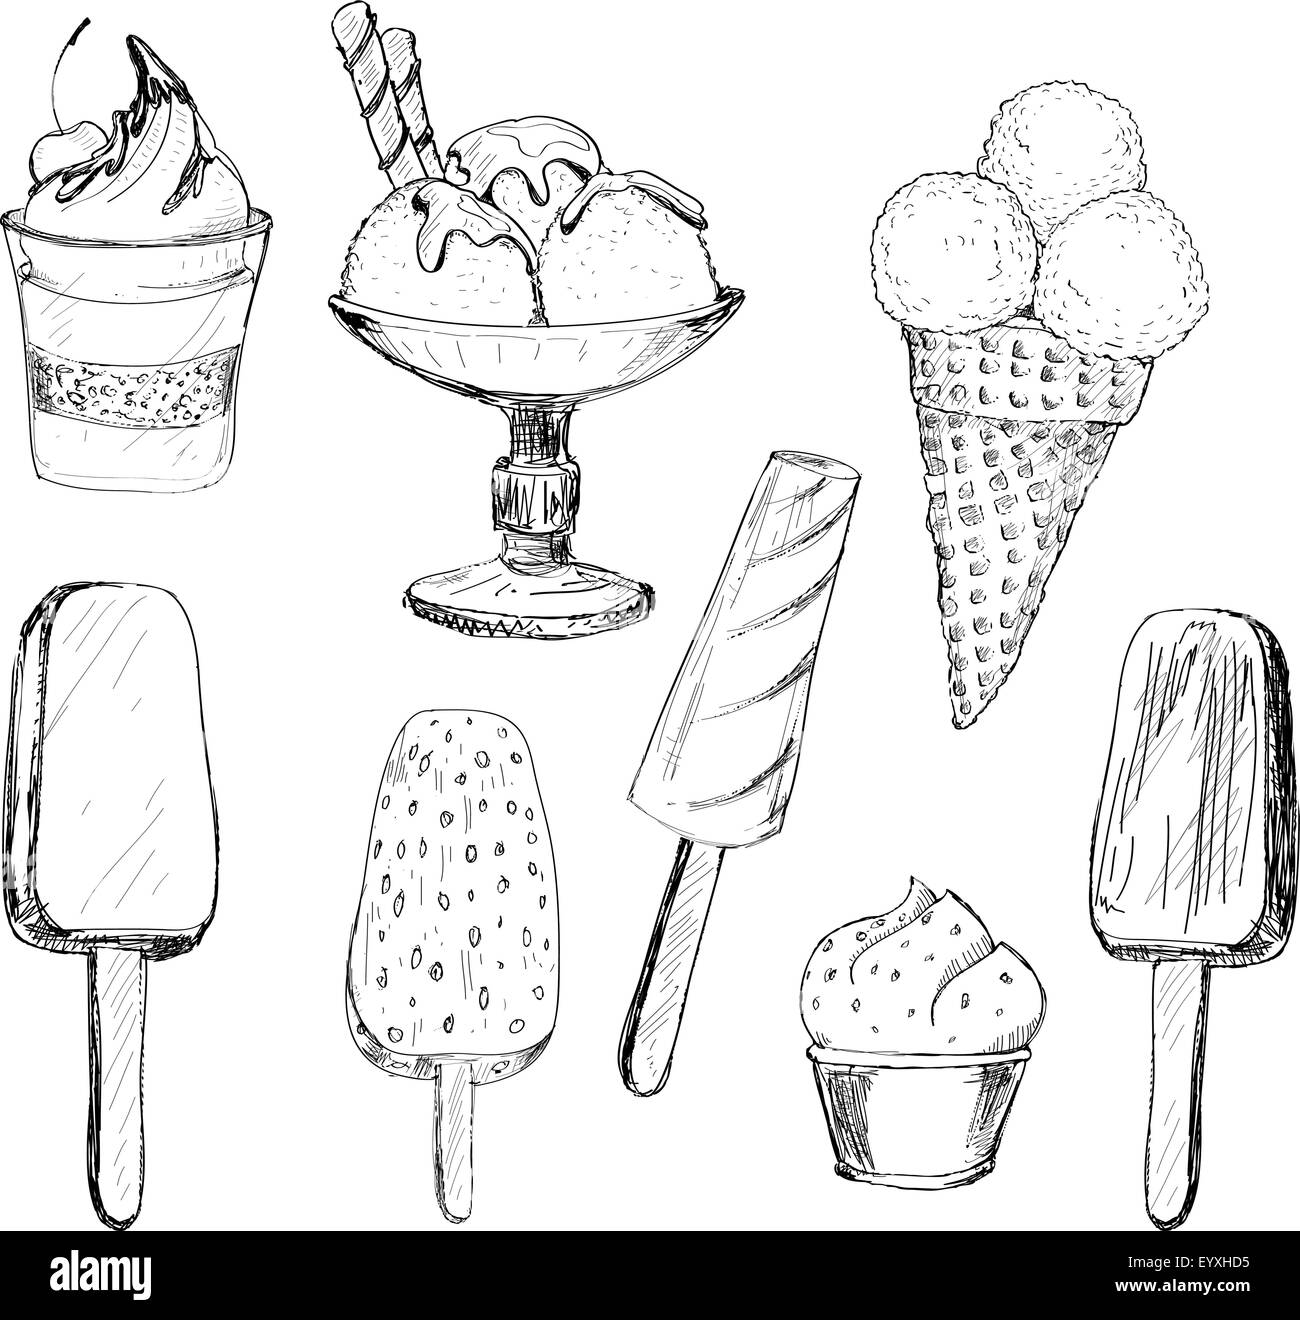 Ice cream. Set of graphic hand drawn illustrations Stock Vector